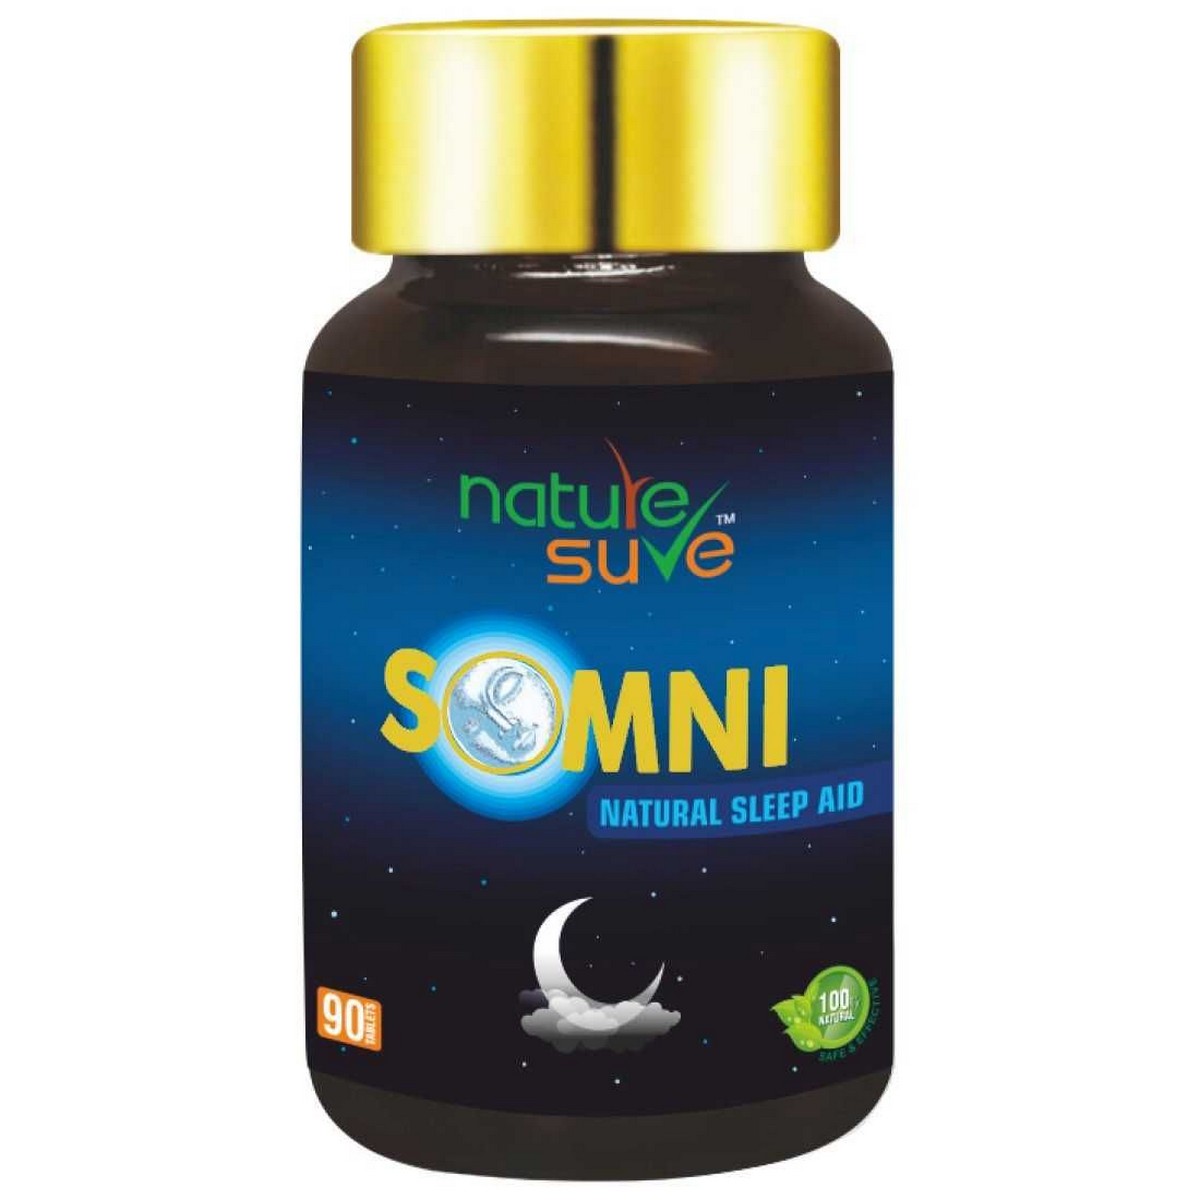 Nature Sure Somni Natural Sleep Aid 90 Tabltes  Nature Sure SOMNI Natural Sleep Aid Daily Herbal Supplement for Men and Women